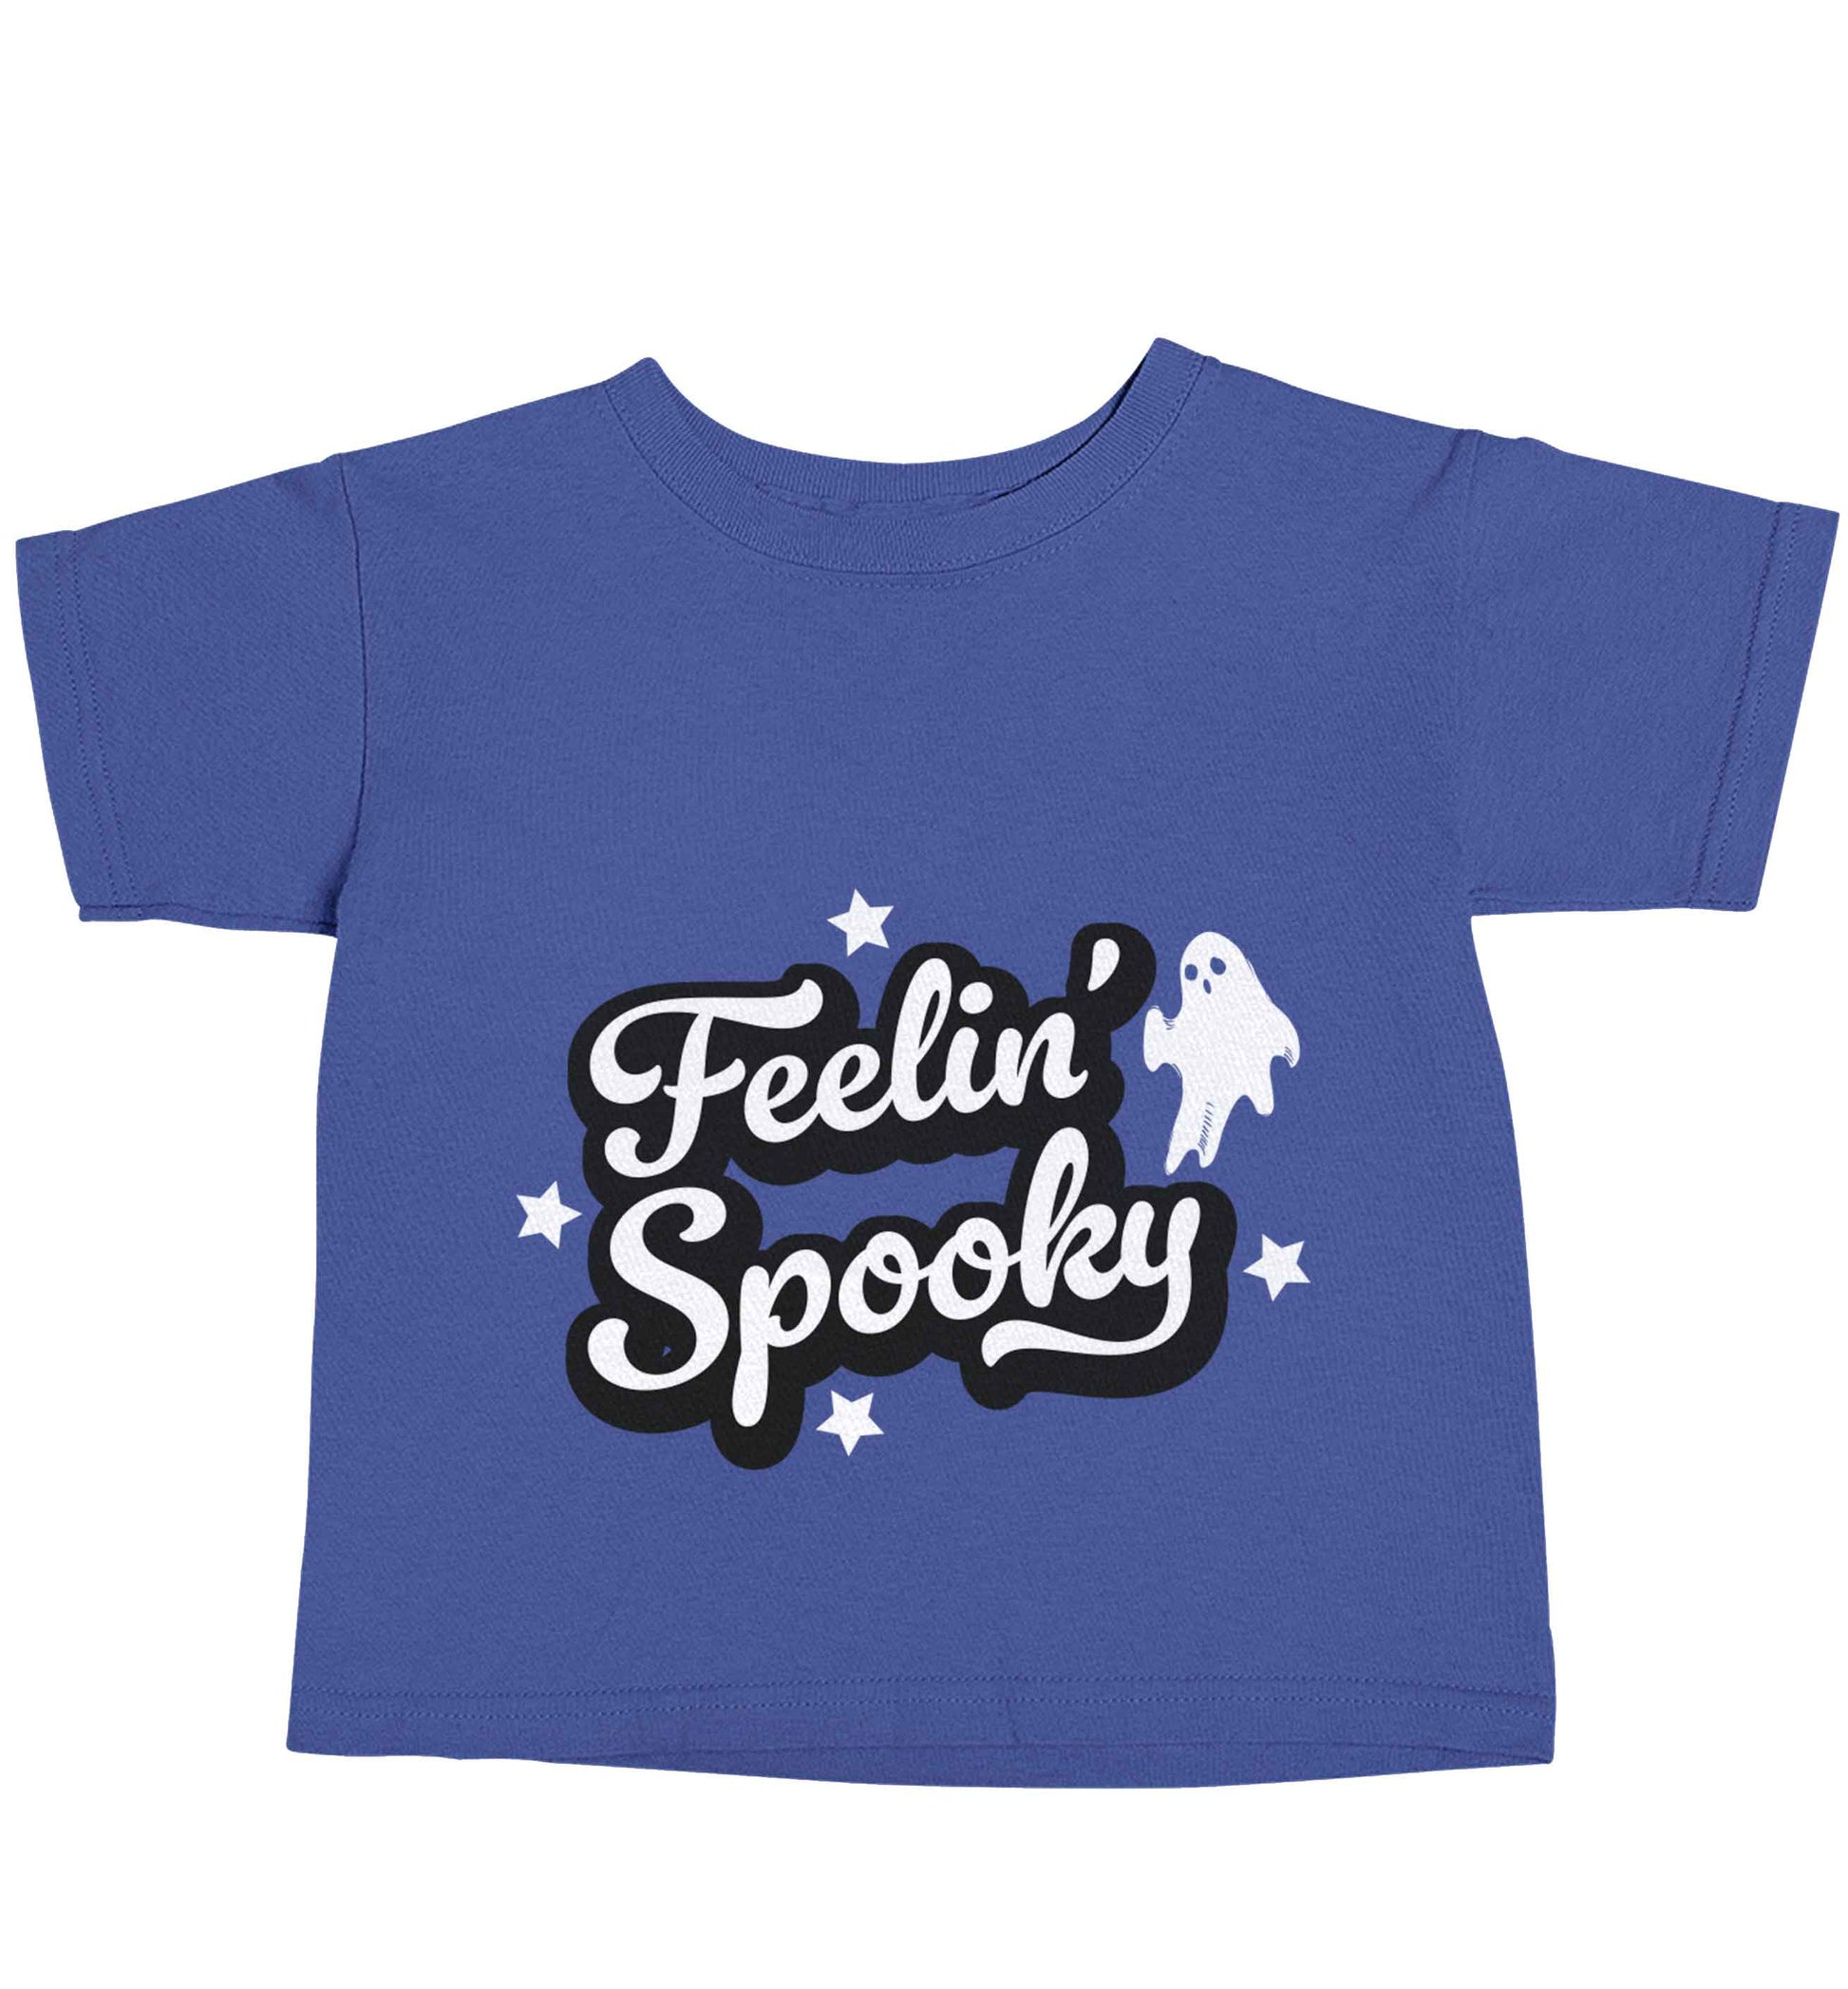 Feelin' Spooky Kit blue baby toddler Tshirt 2 Years